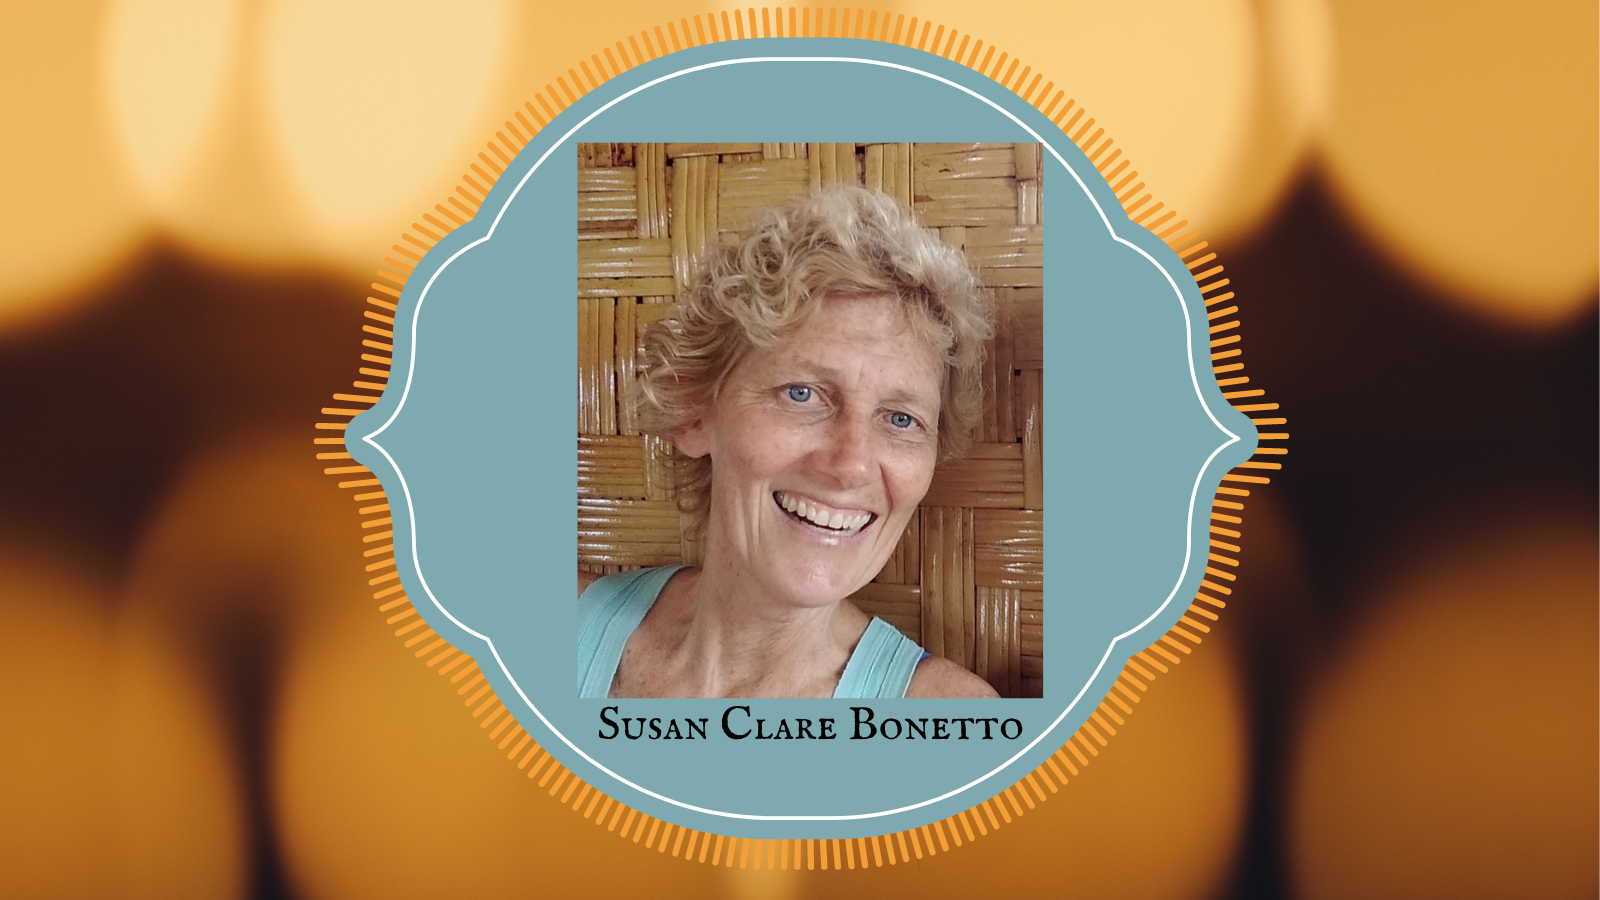 Headshot of smiling blonde woman, Susan Clare Bonetto